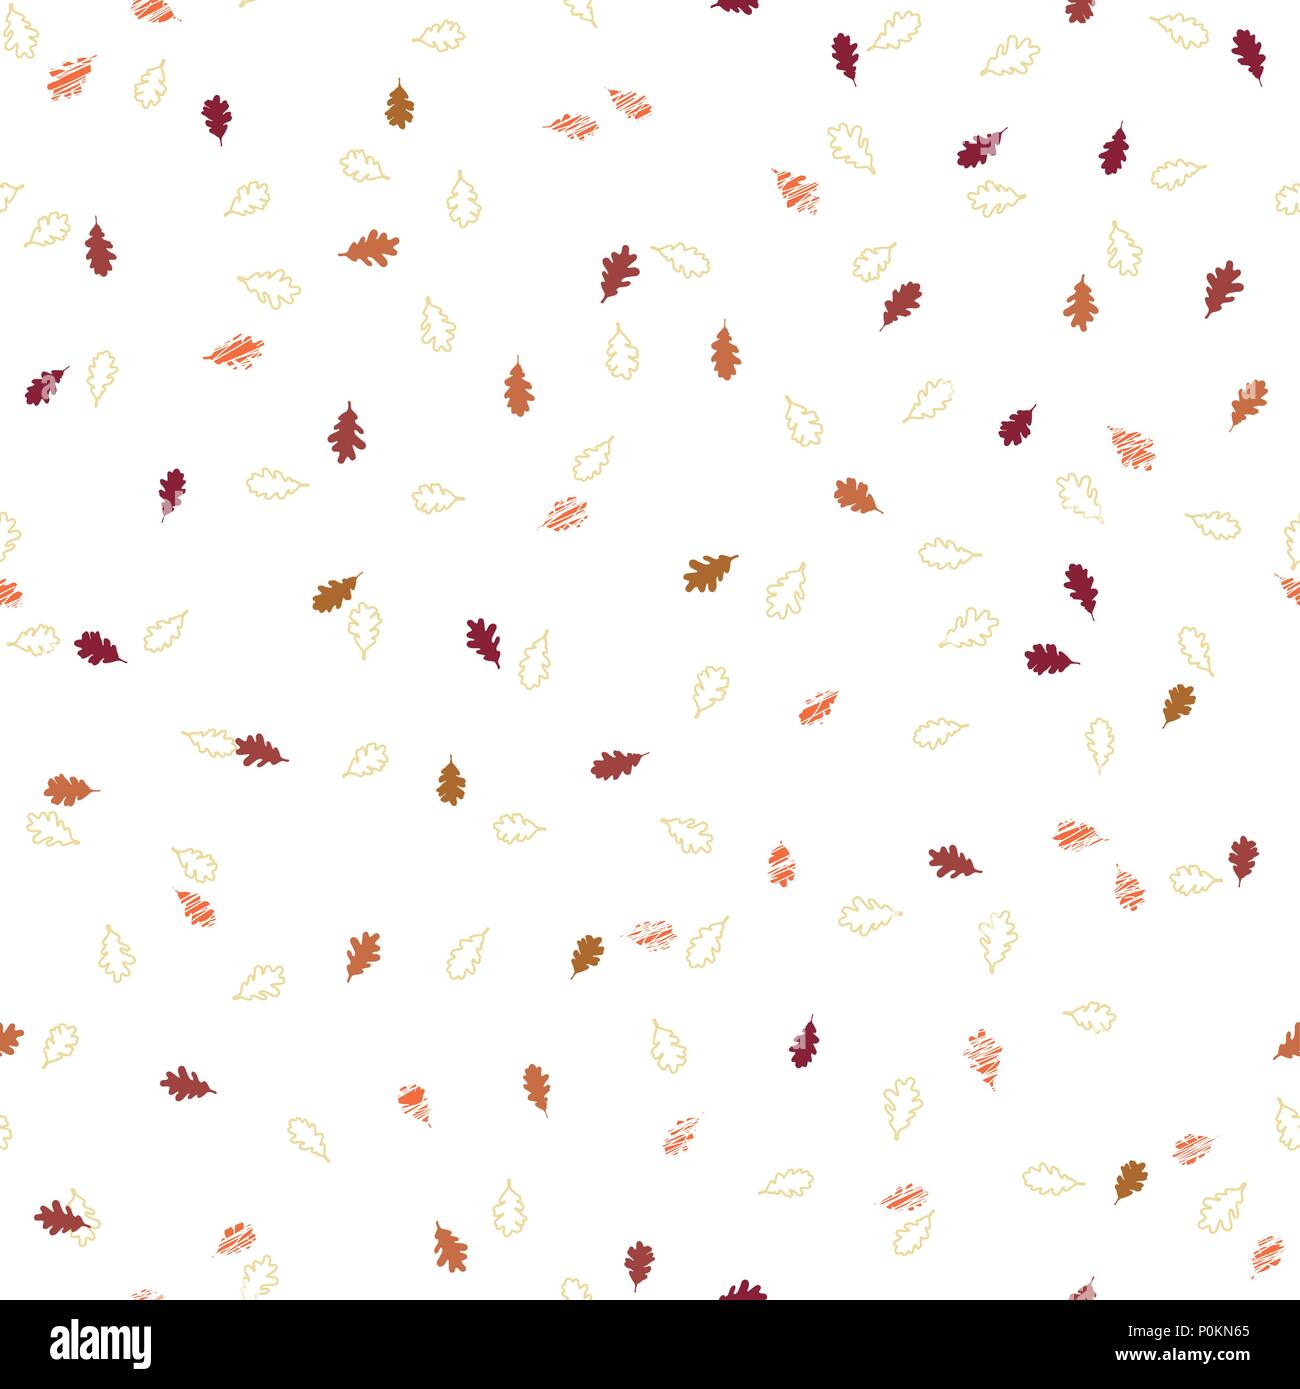 Page 2  Free customizable autumn desktop wallpaper templates  Canva